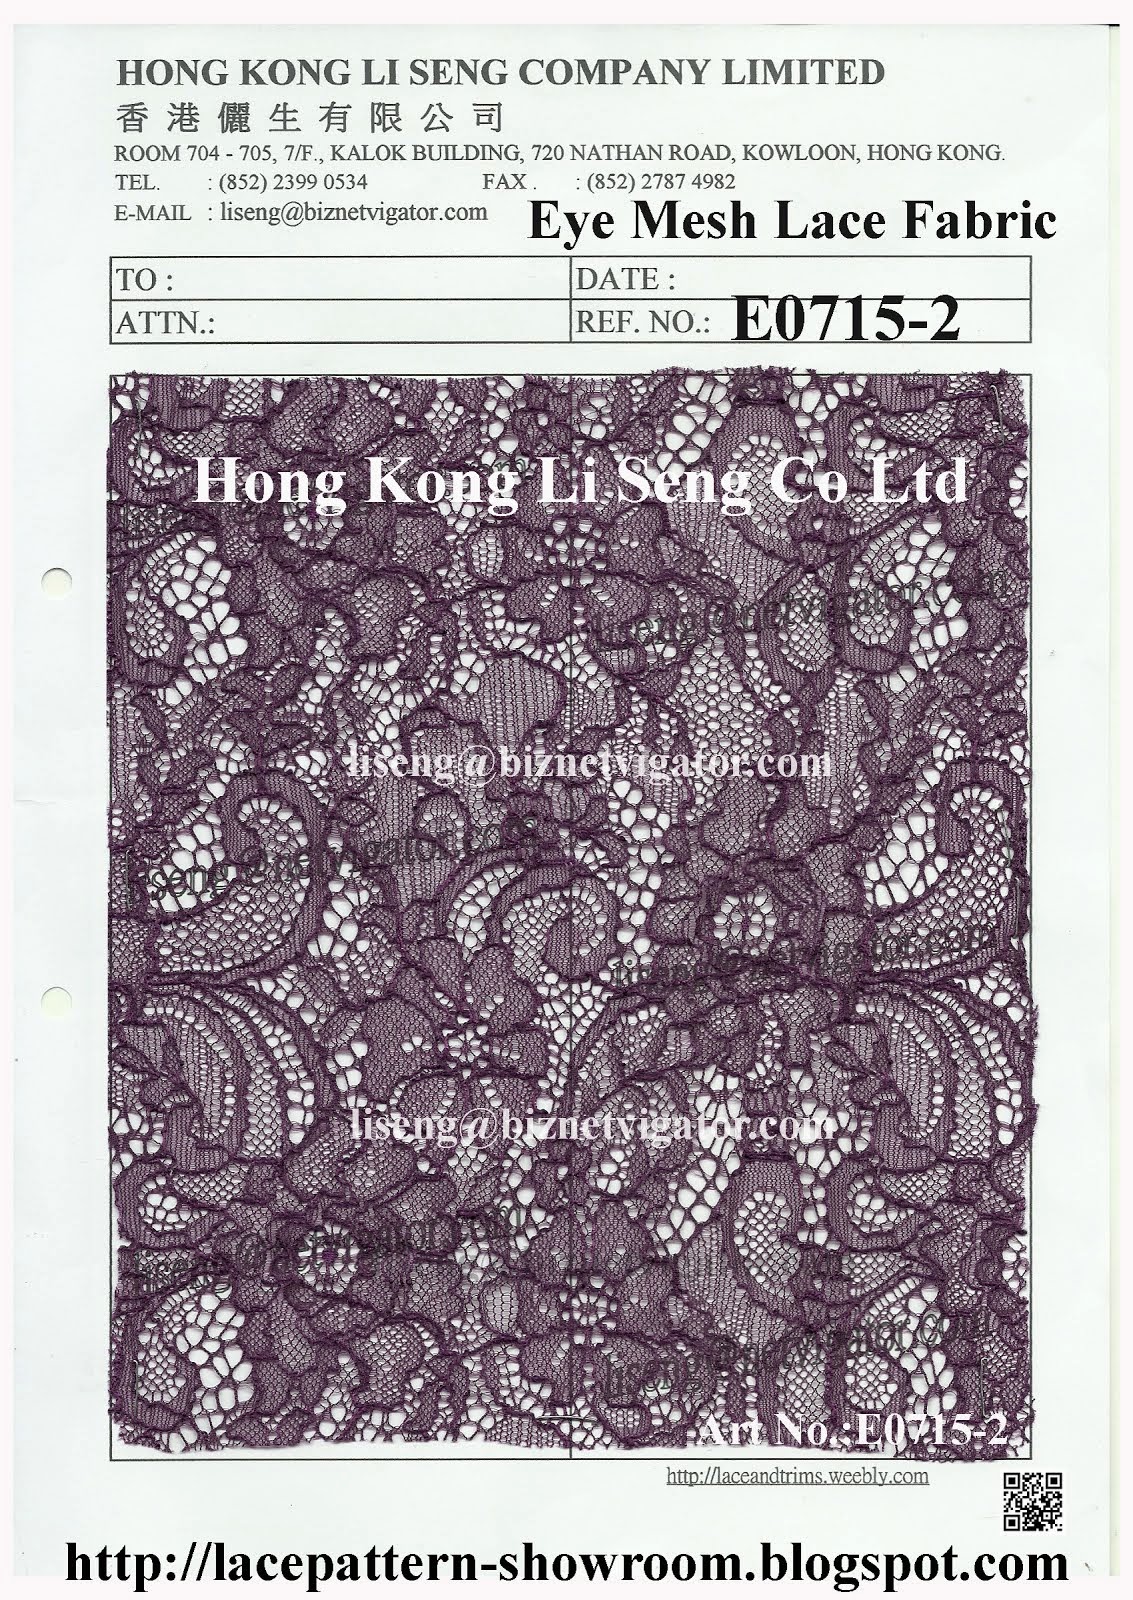 Introduce the Good Lace Trims Lace Fabric Manufacturer Wholesaler Supplier Hong Kong Li Seng Co Ltd